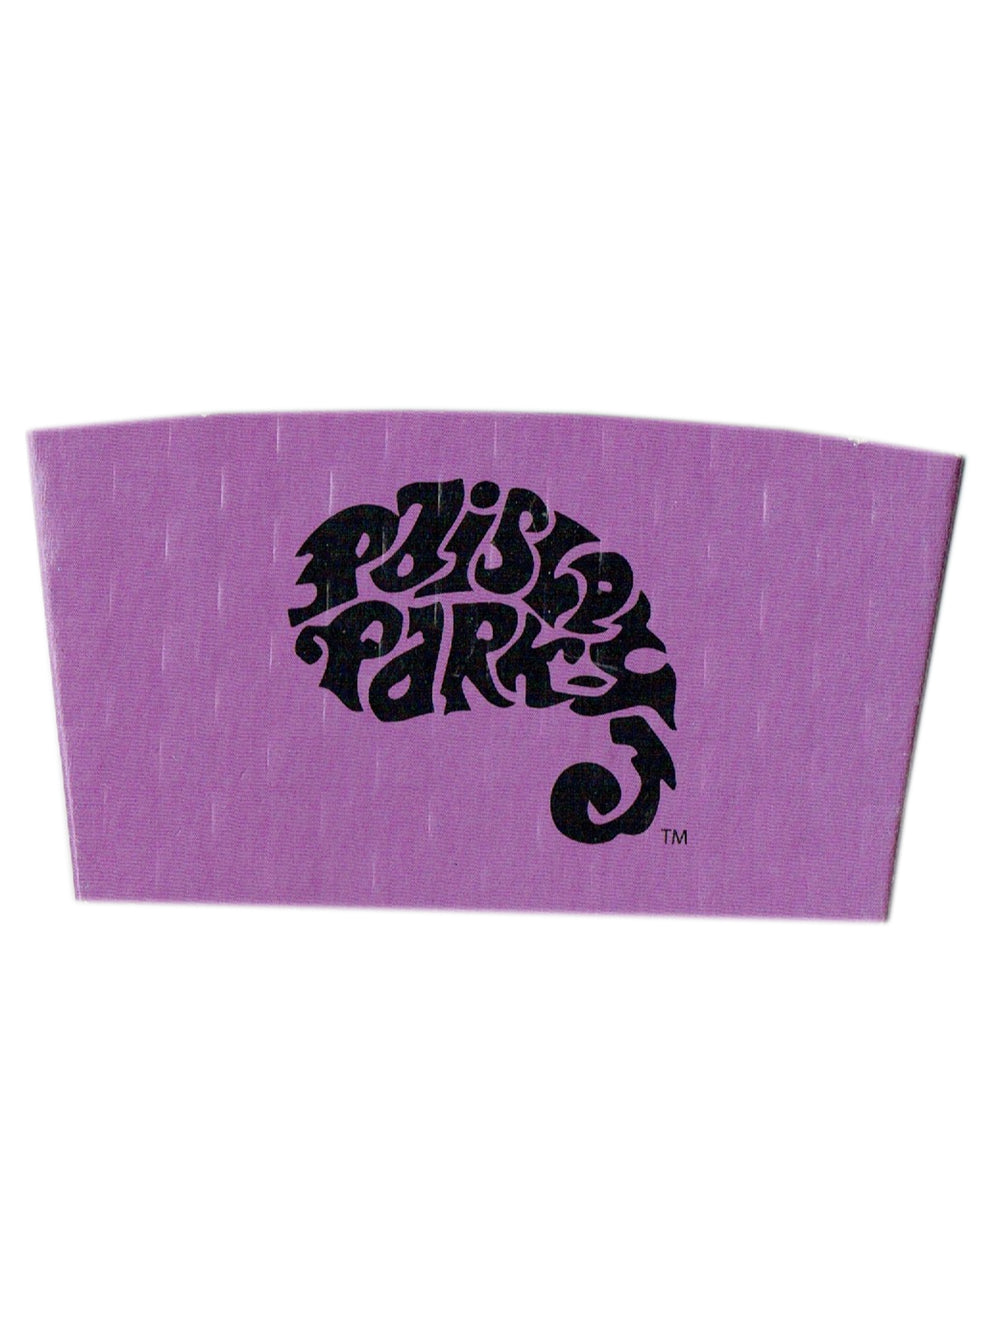 Prince – Paisley Park Cup Holder Printed Both Sides Prince